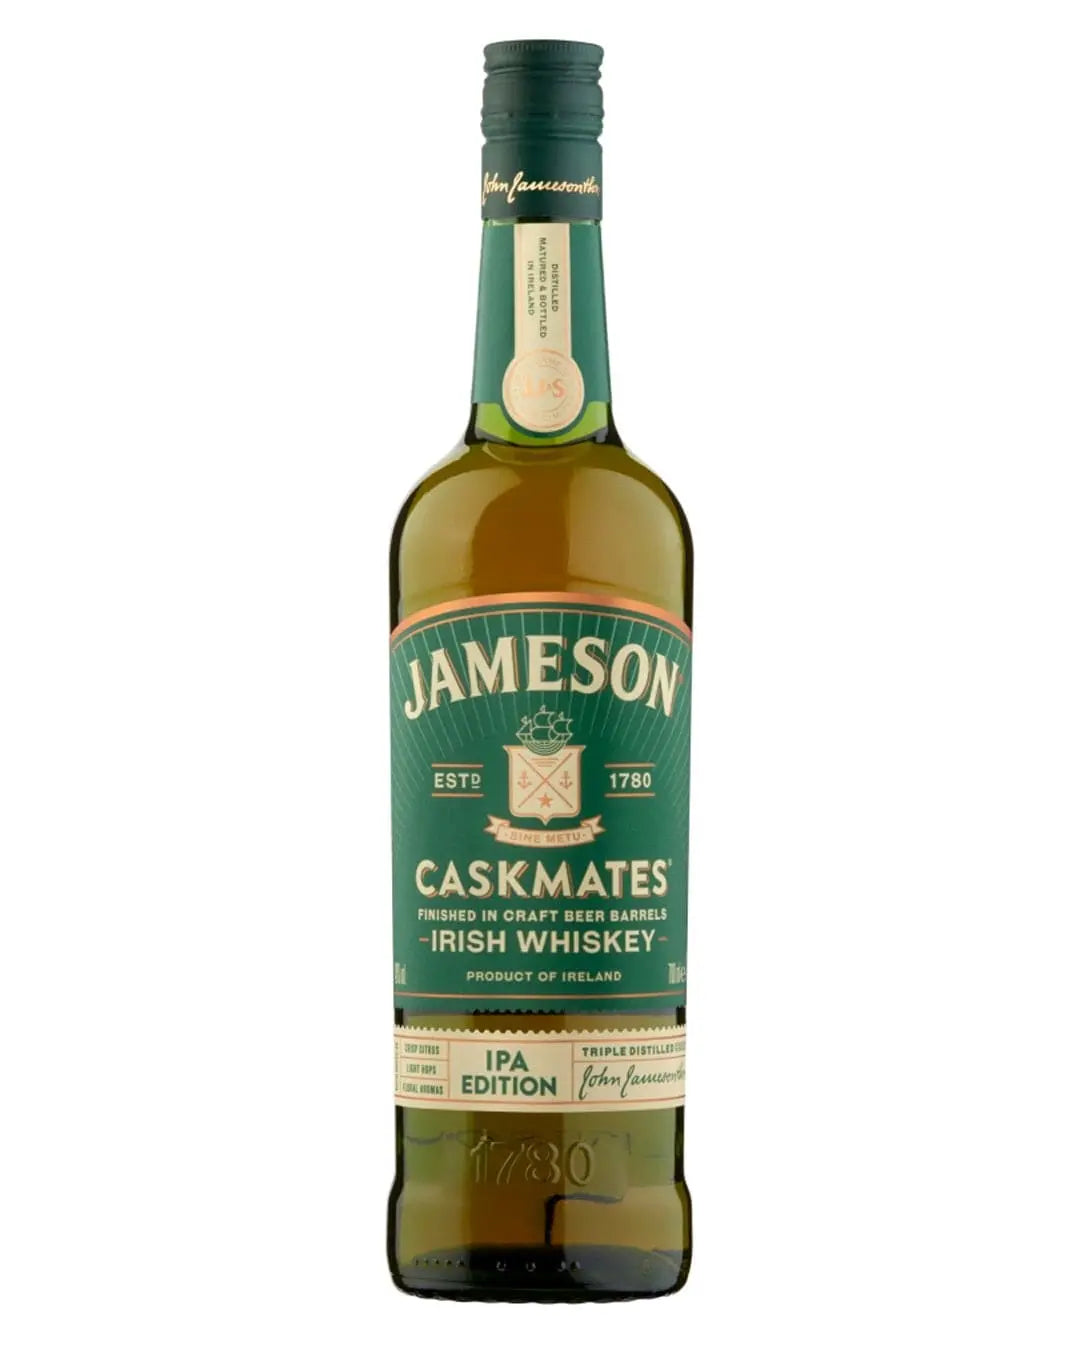 Jameson Caskmates IPA Edition Irish Whisky, 70 cl Whisky 5011007025960